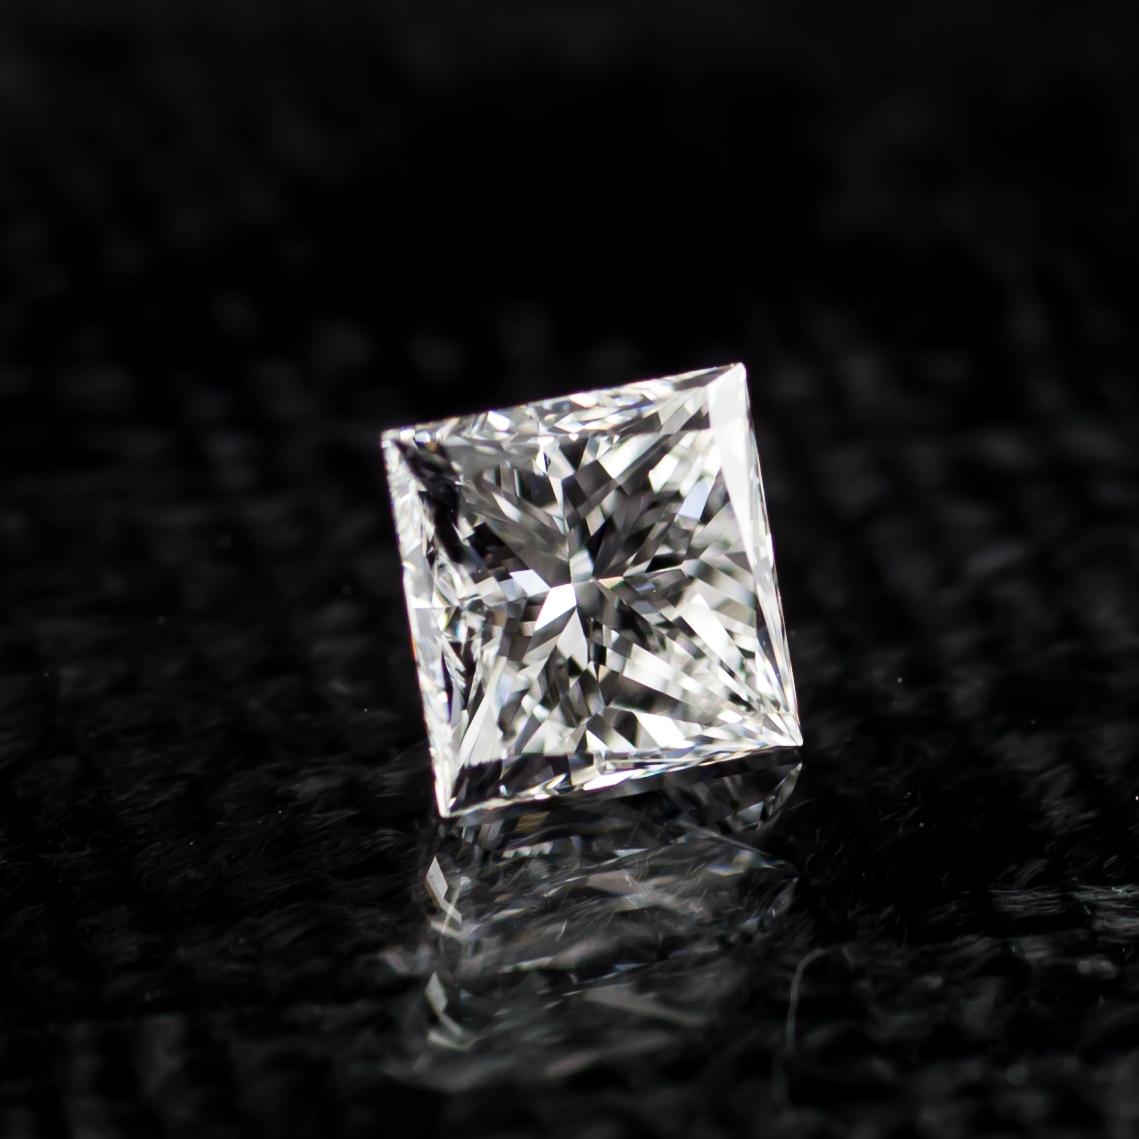 Diamond General Info
Diamond Cut: Square Modified Brilliant
Measurements: 6.67  x  6.63  -  4.17 mm

Diamond Grading Results
Carat Weight: 0.76
Color Grade: E
Clarity Grade: VS1

Additional Grading Information 
Polish:  Good
Symmetry: